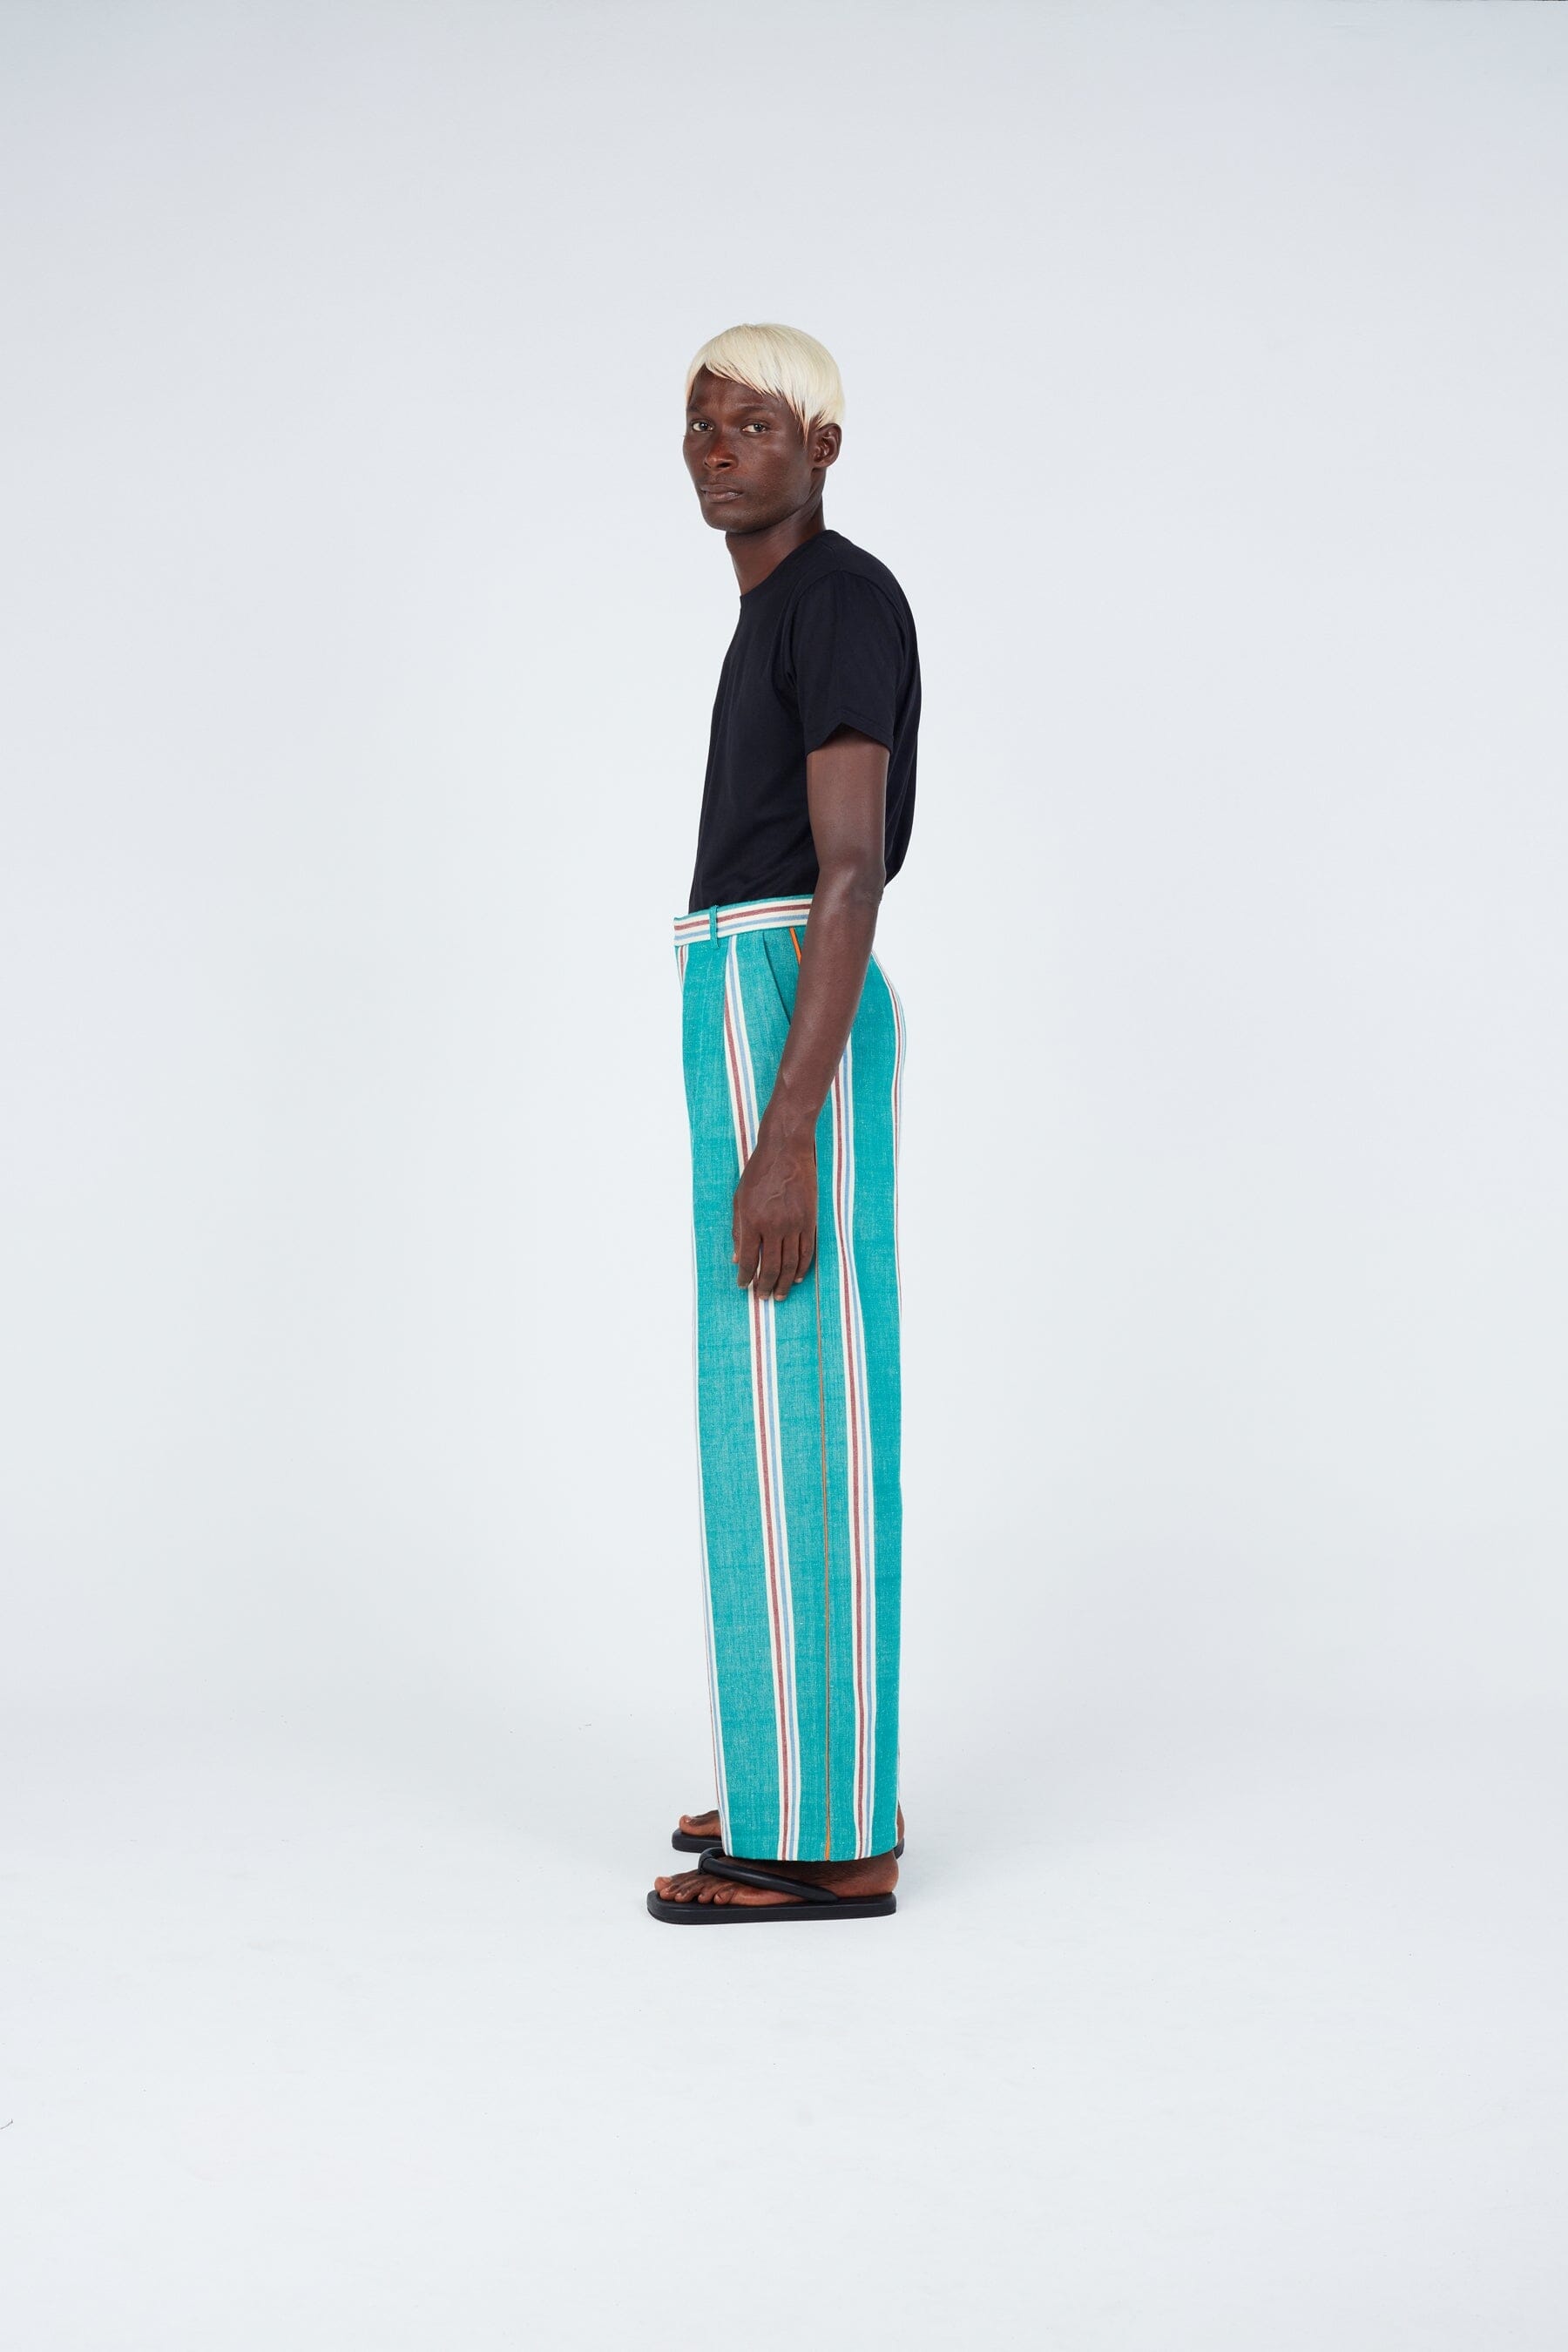 Stripe Seam Classic Wide Pants • Green New LaurenceAirline 